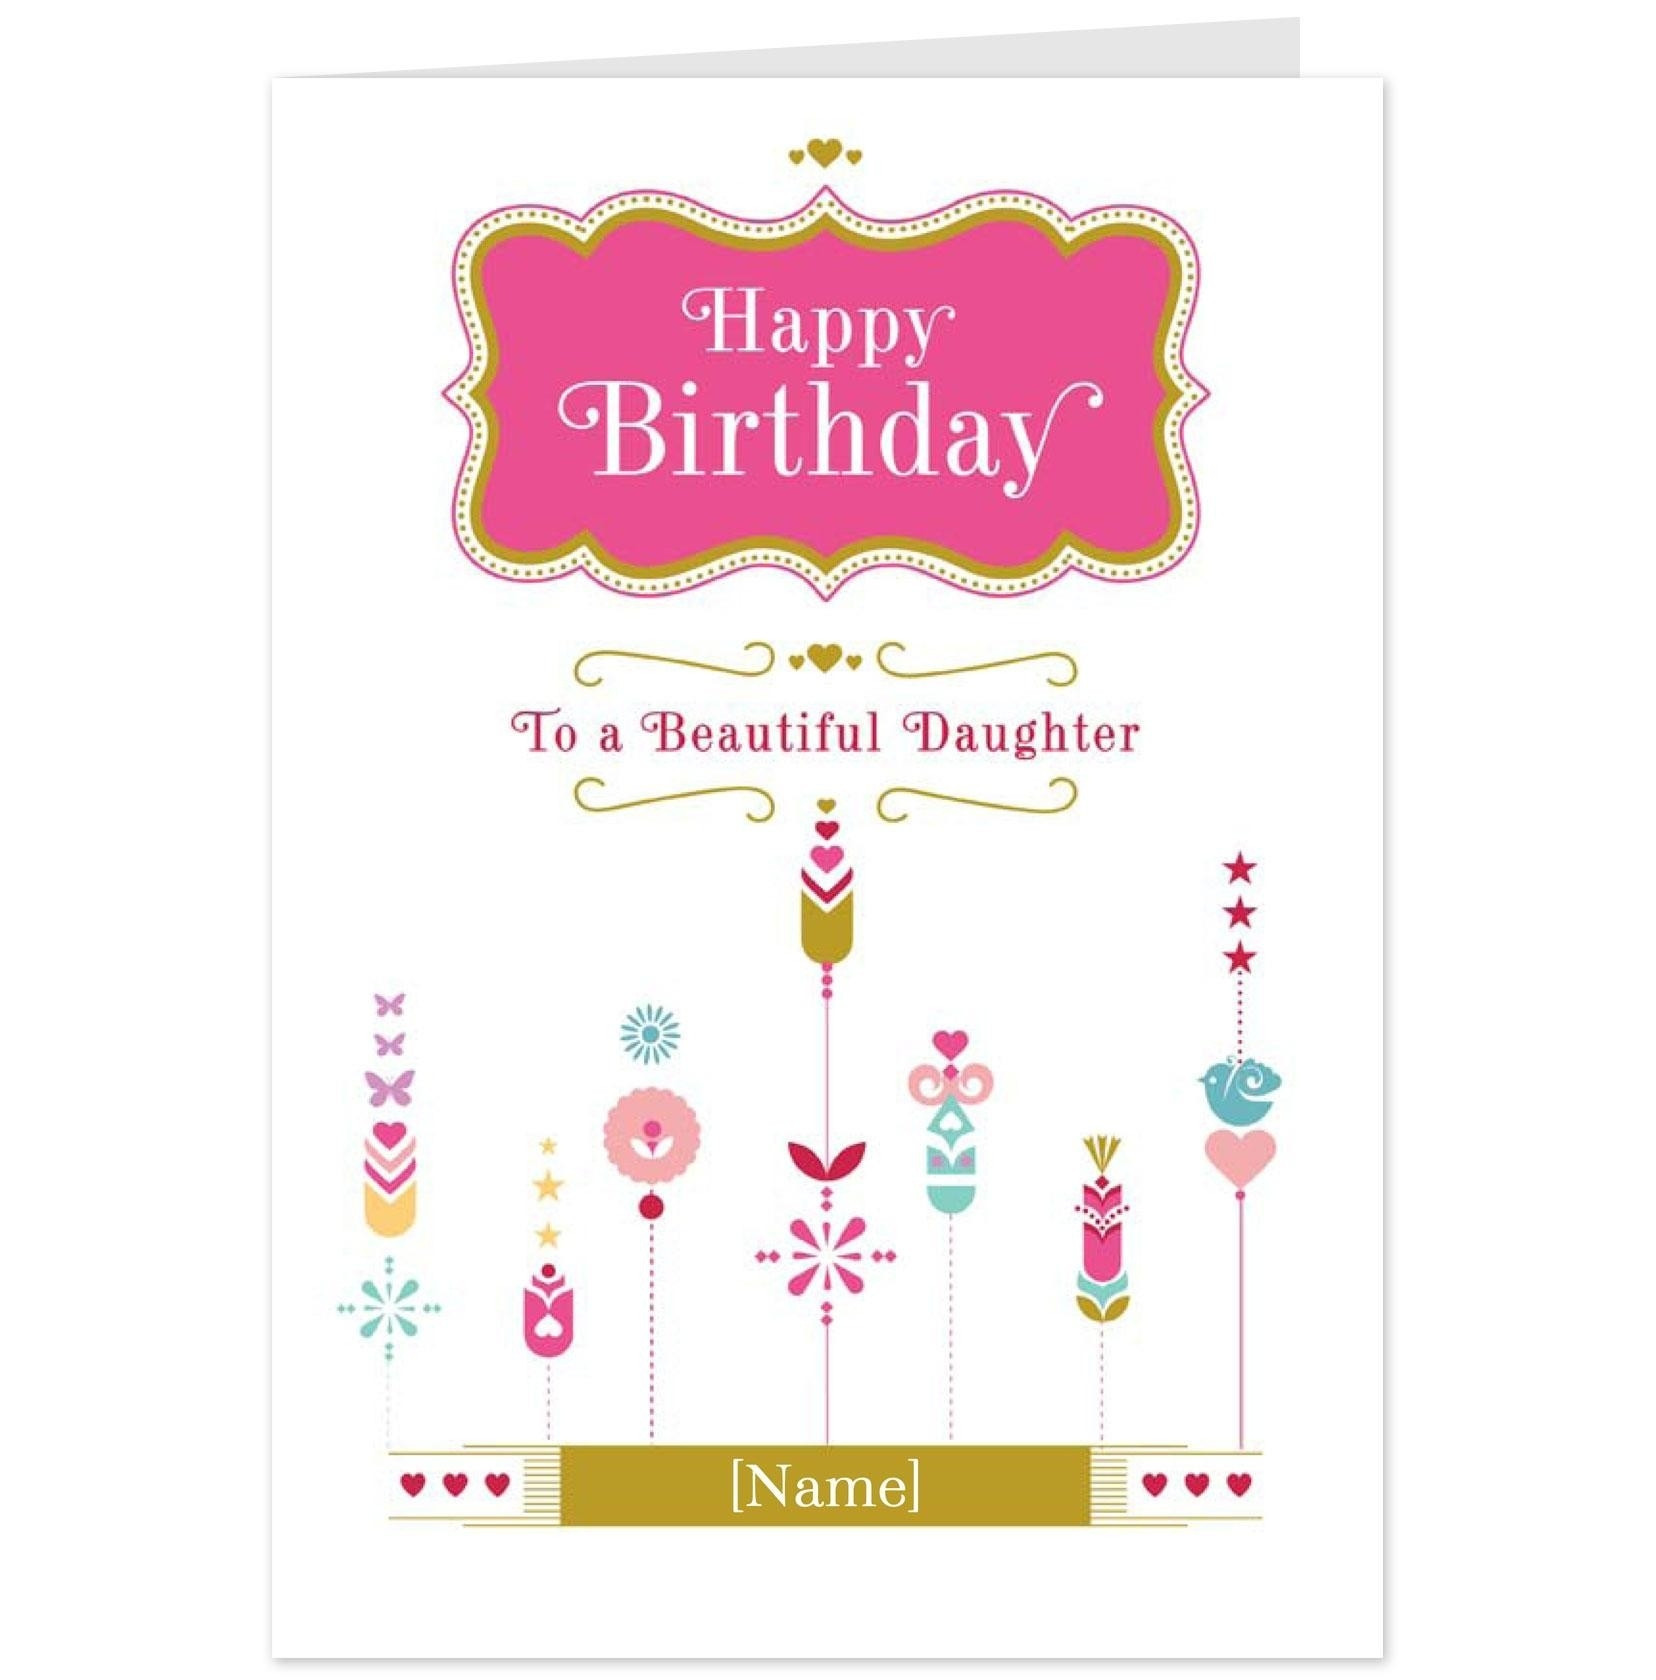 Hallmark Online Birthday Card
 Free Printable Hallmark Birthday Cards